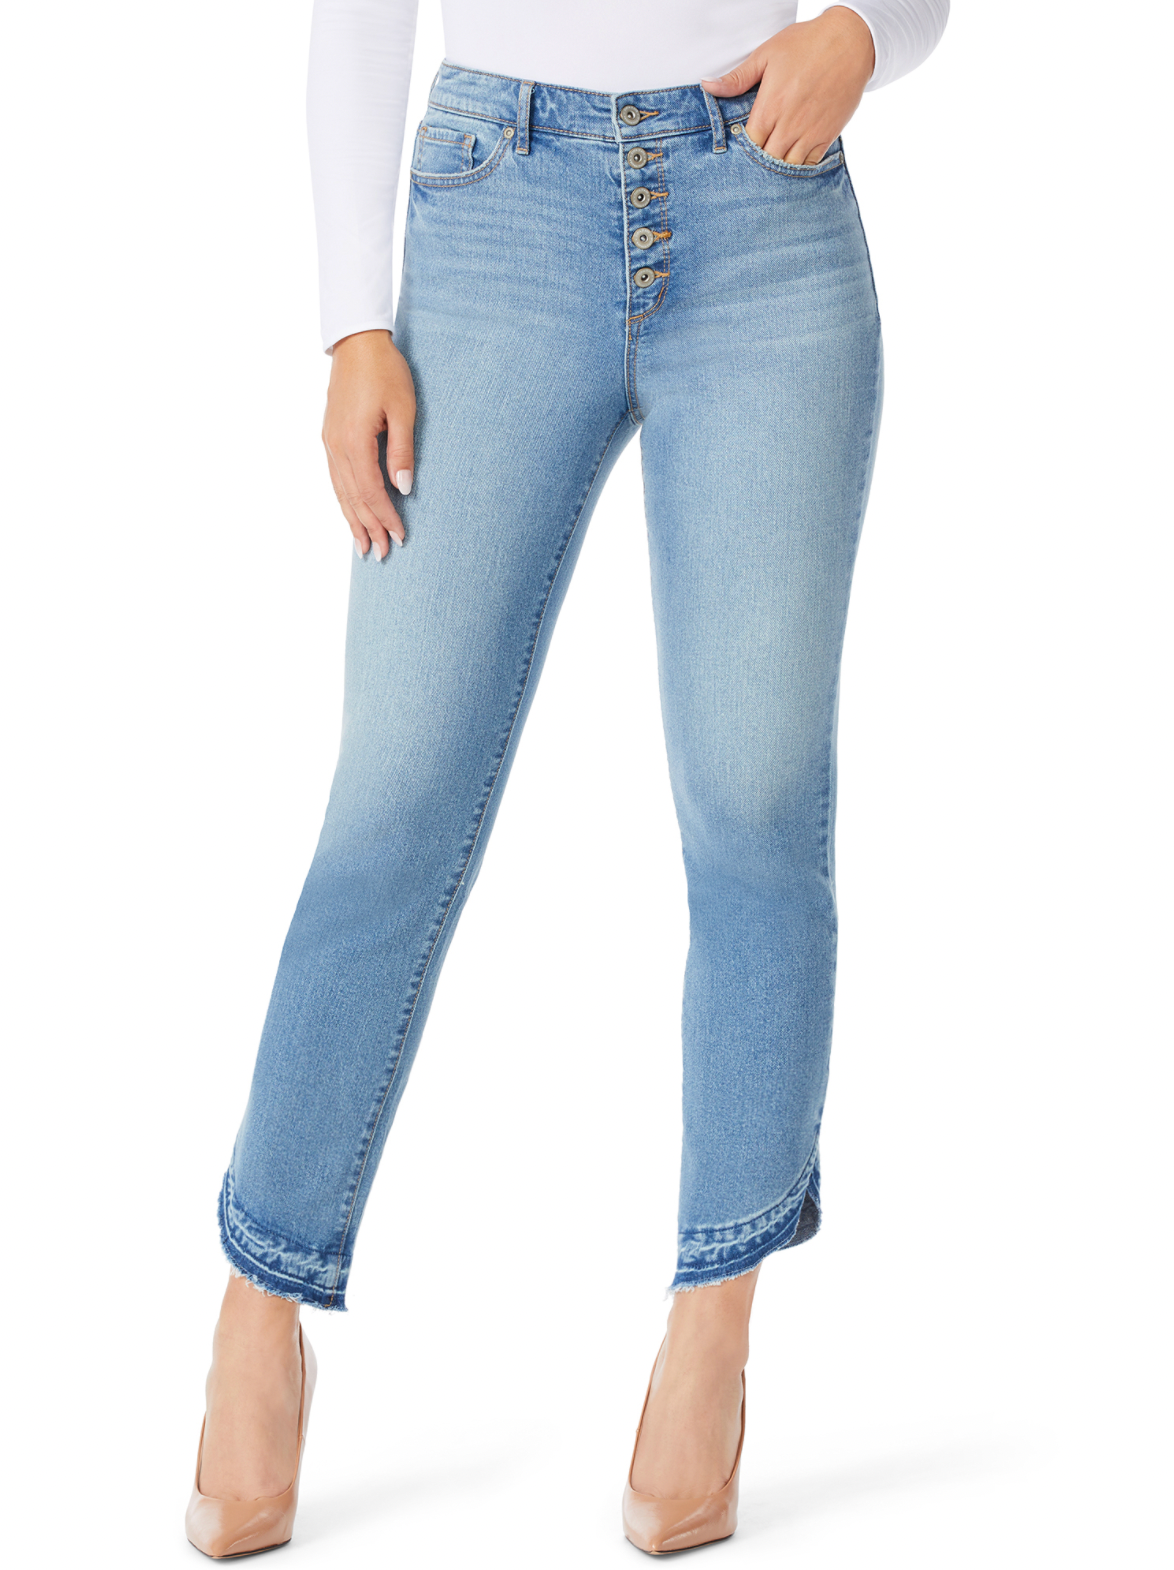 Sofia Jeans by Sofia Vergara Women's Leslie High-Rise Slim Straight Jeans